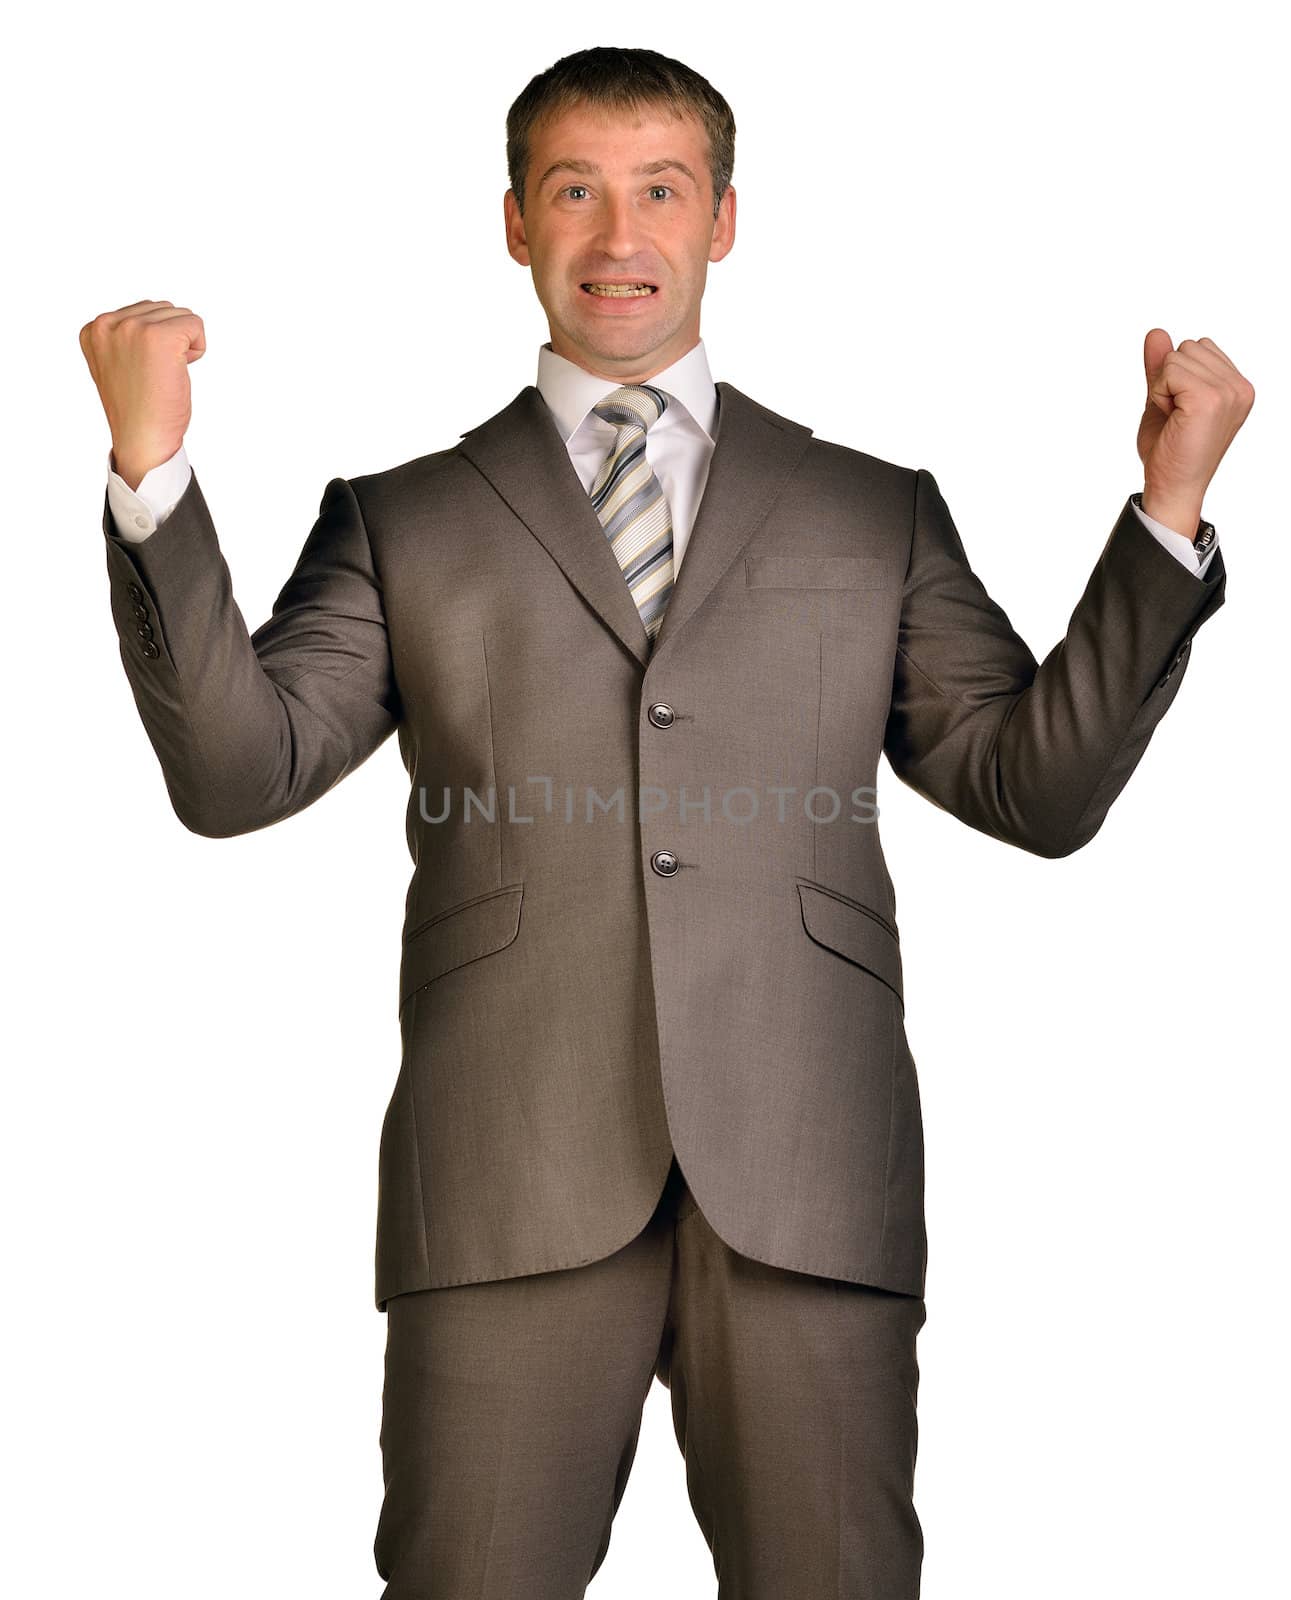 Joyful businessman raised his hands up by cherezoff